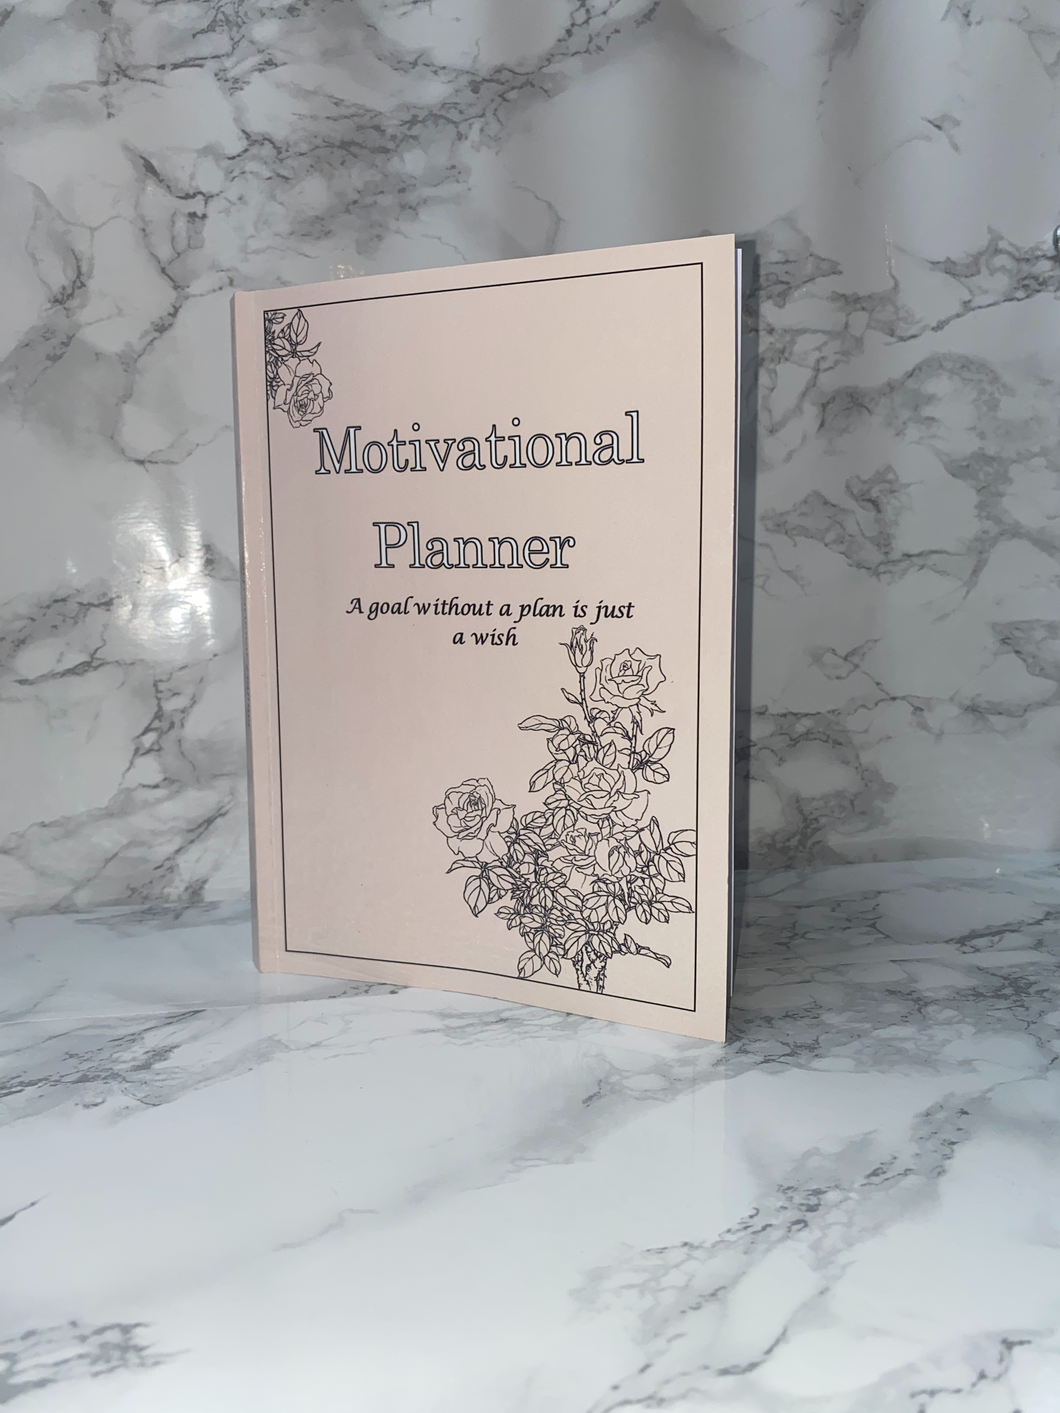 The Motivational Planner